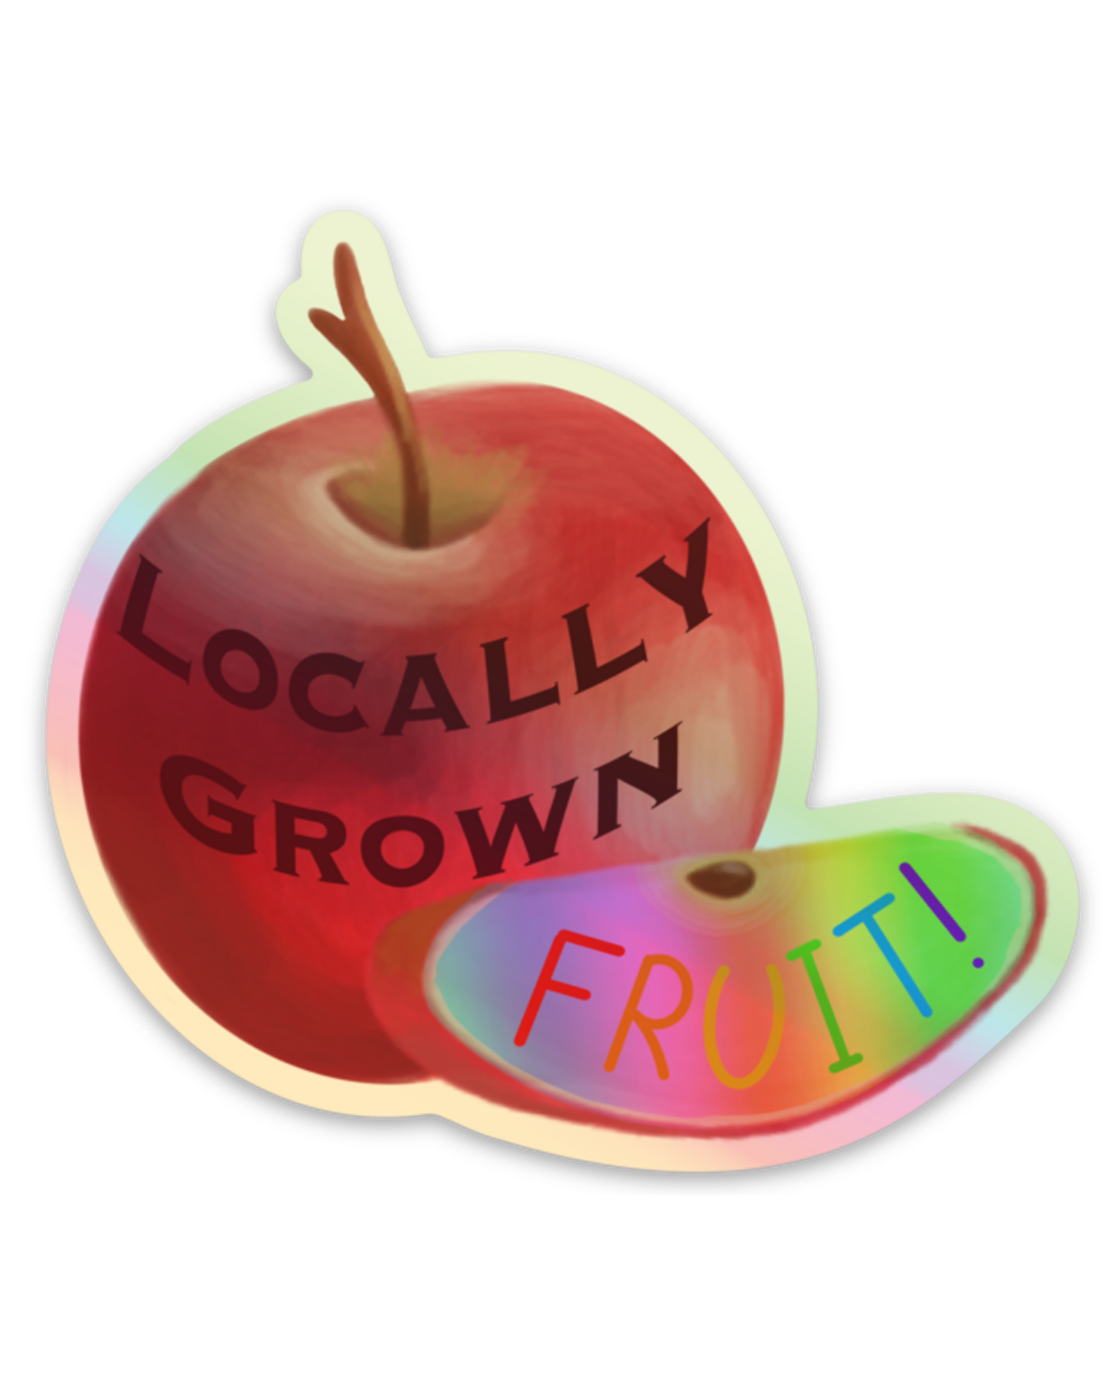 'Locally Grown Fuit' Holographic Vinyl Sticker